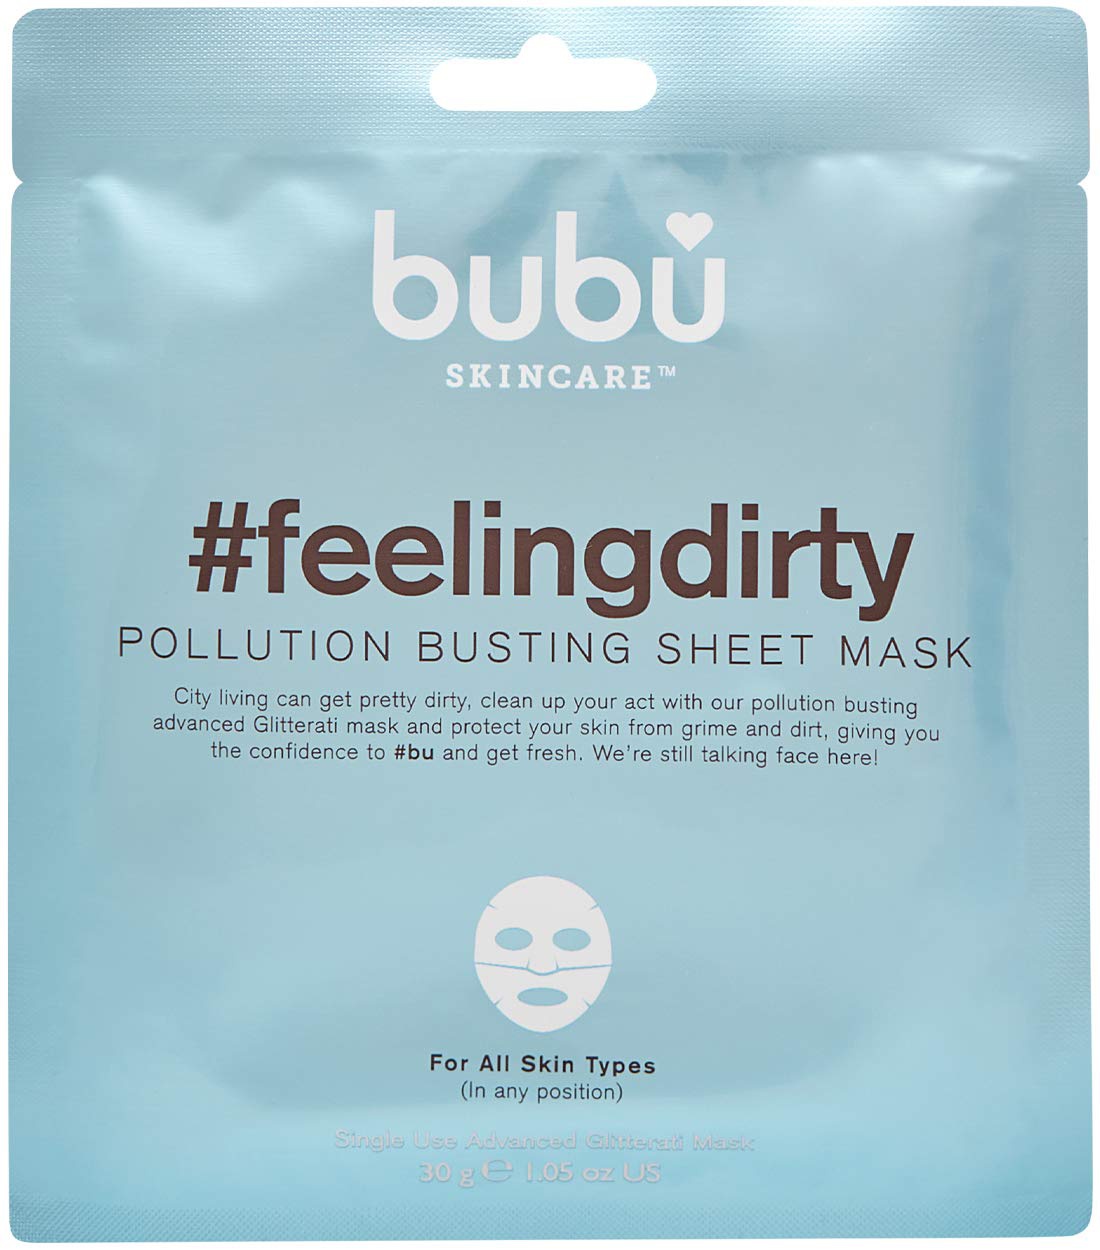 Bubu skincare #feelingdirty